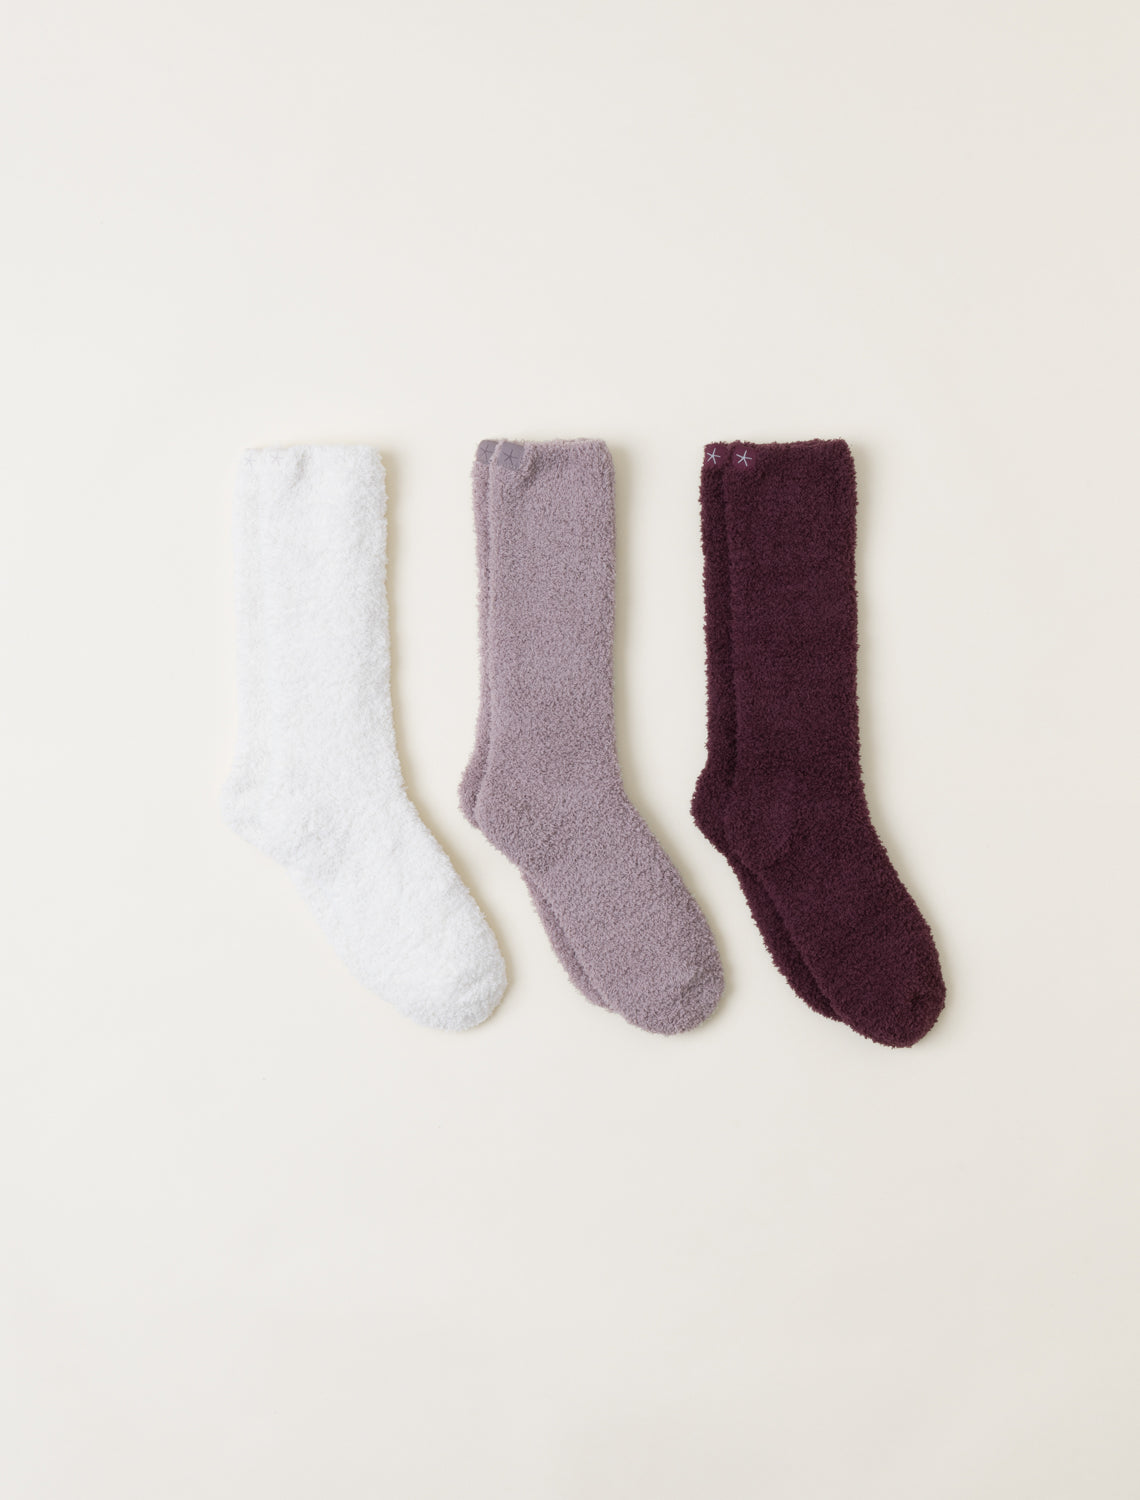  Barefoot Dreams CozyChic Women's Herringbone Socks